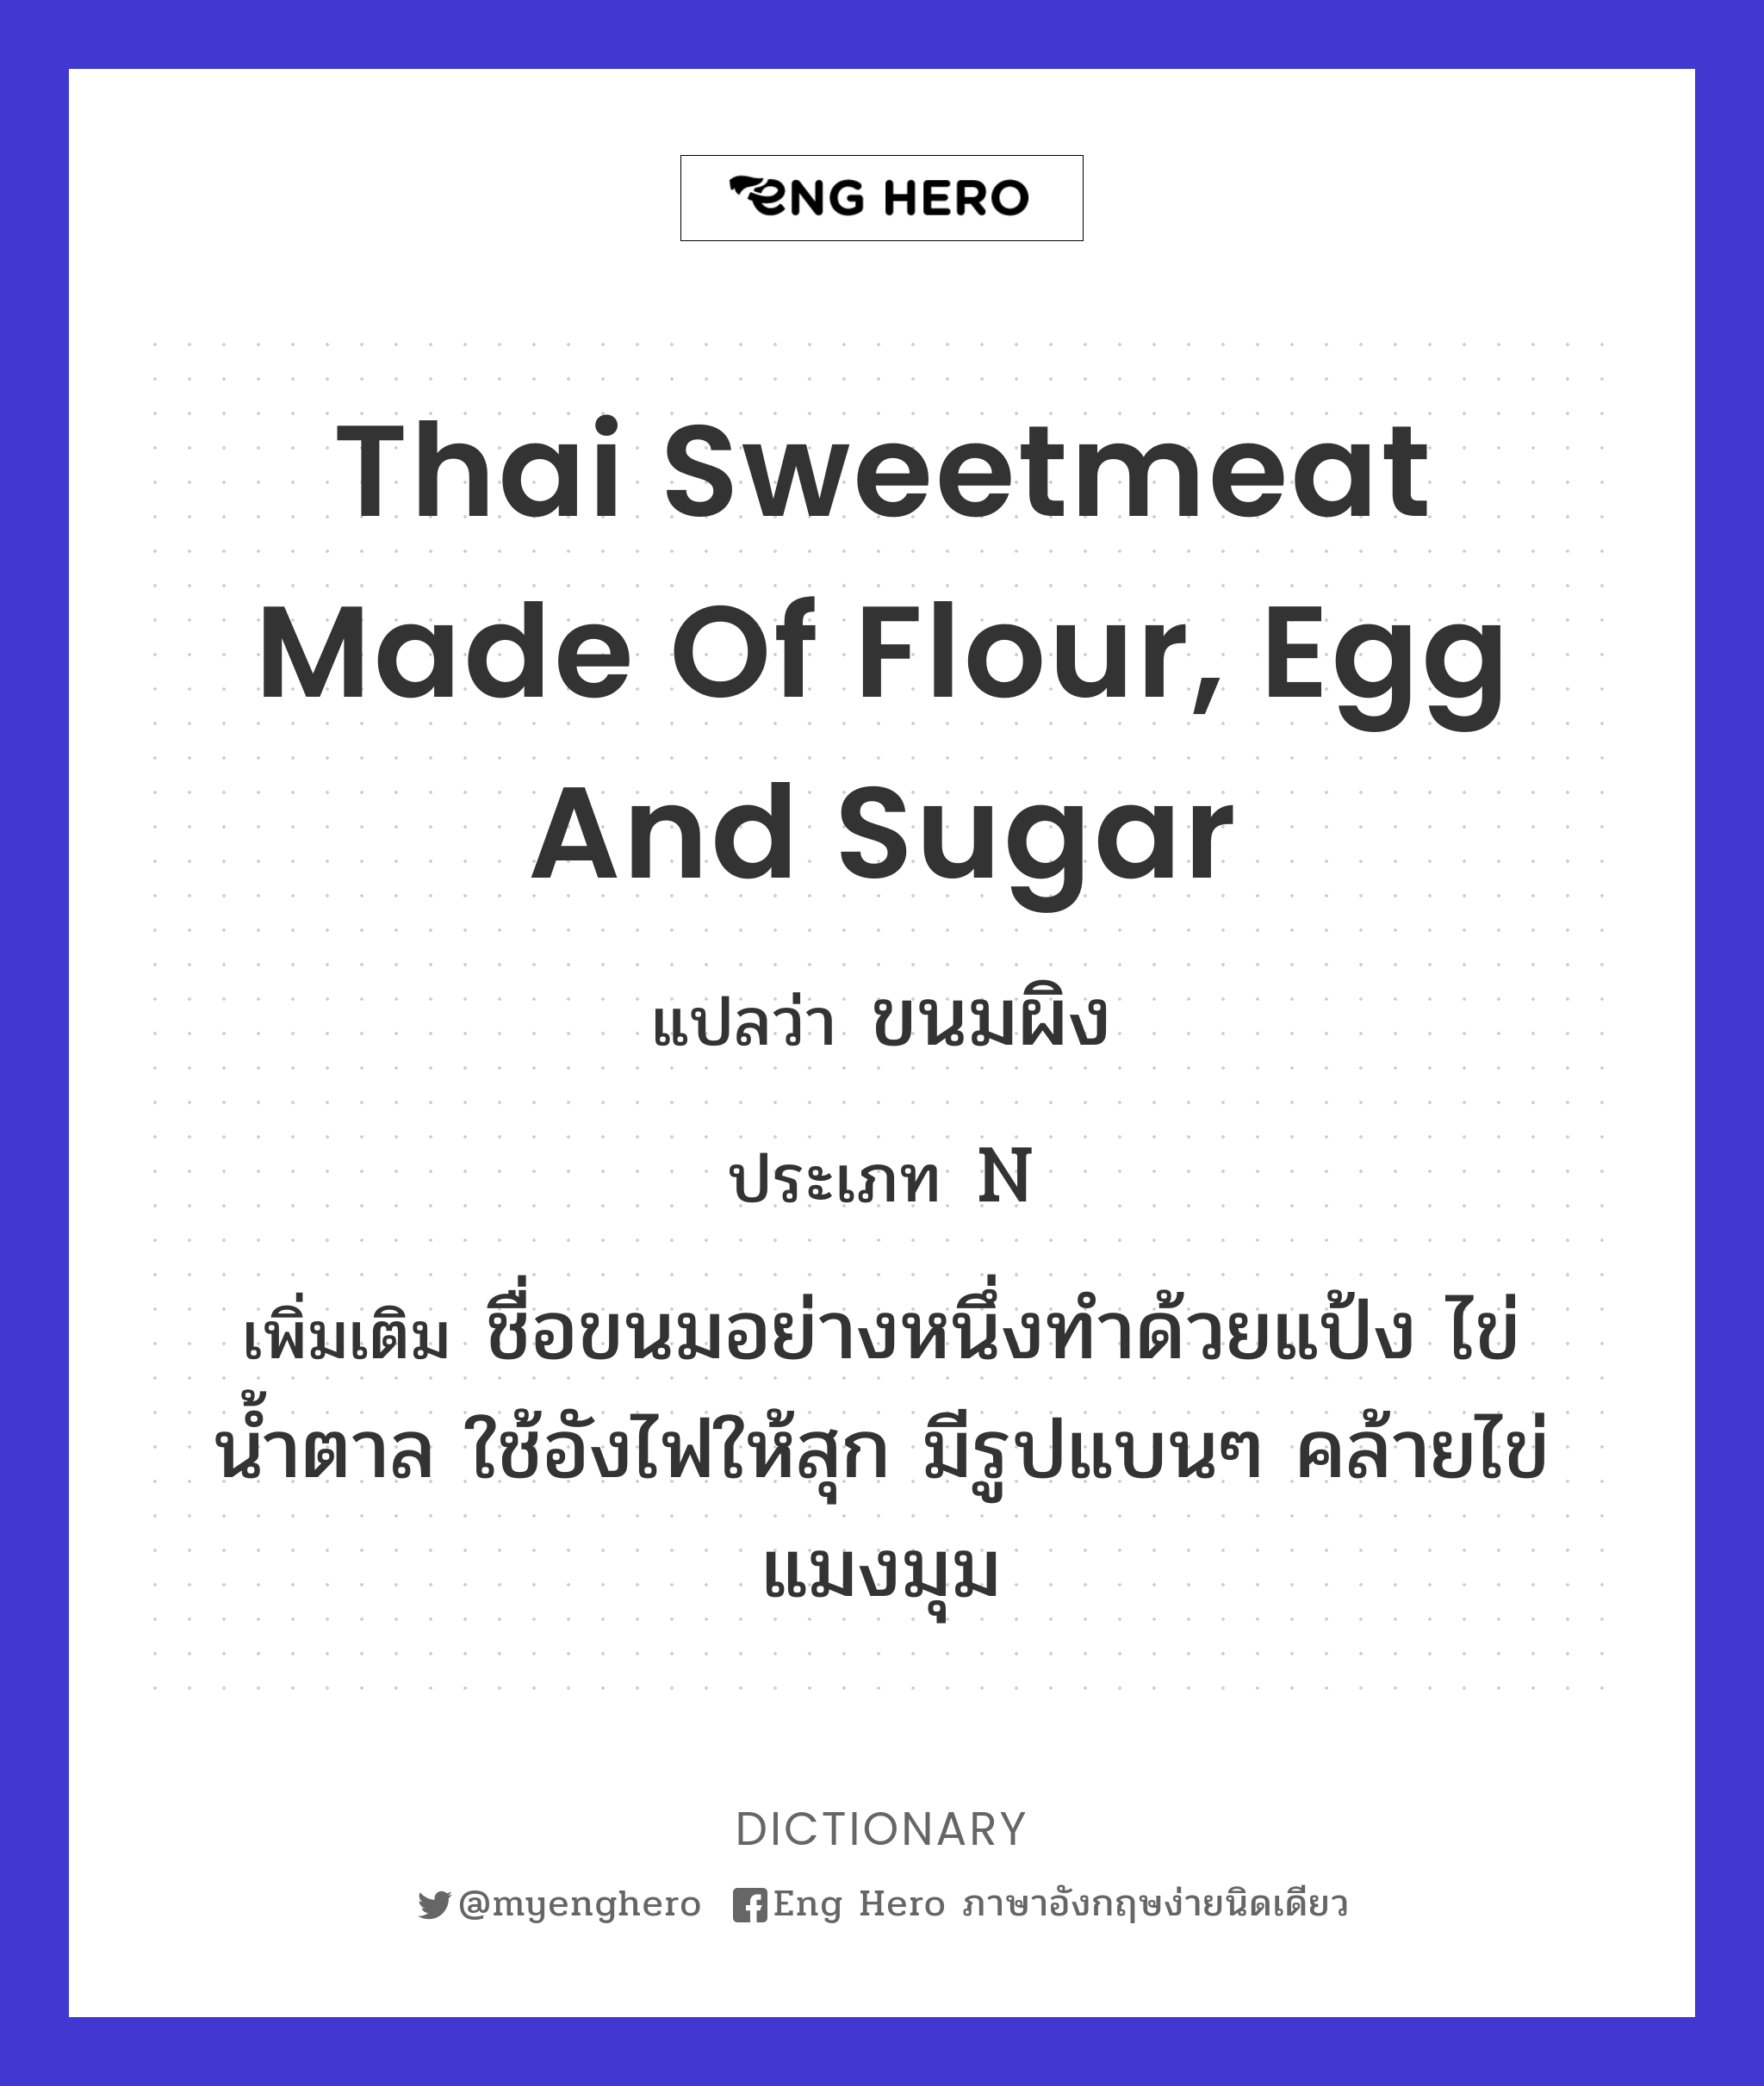 Thai sweetmeat made of flour, egg and sugar